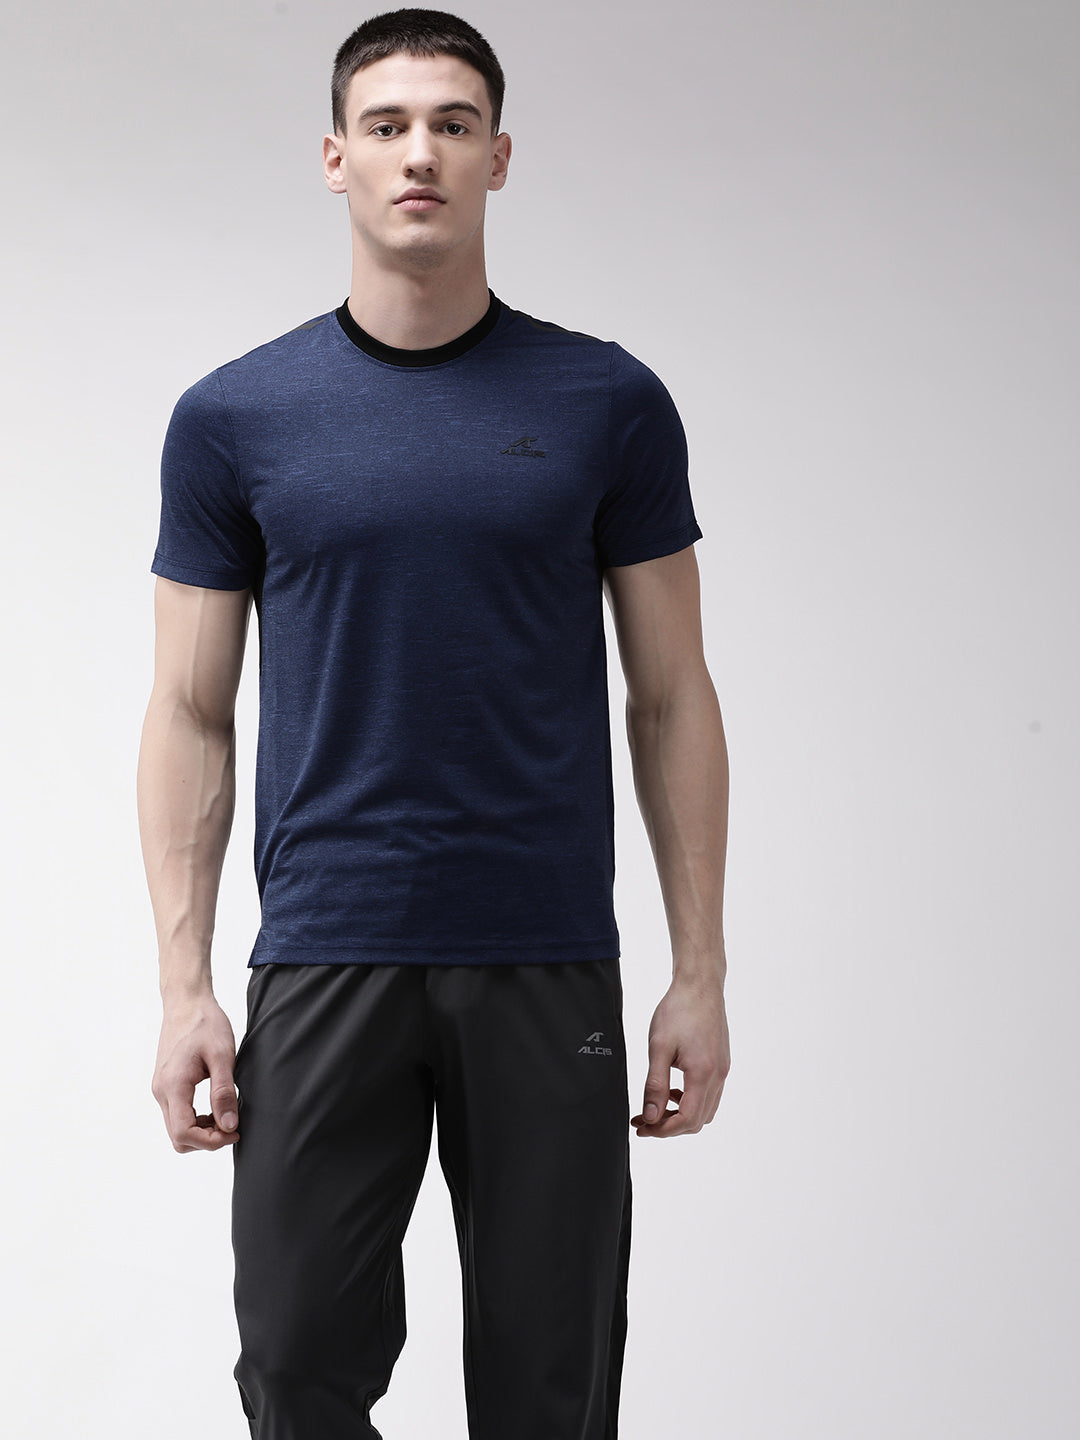 Alcis Men Navy Blue Self Design Round Neck Training T-shirt